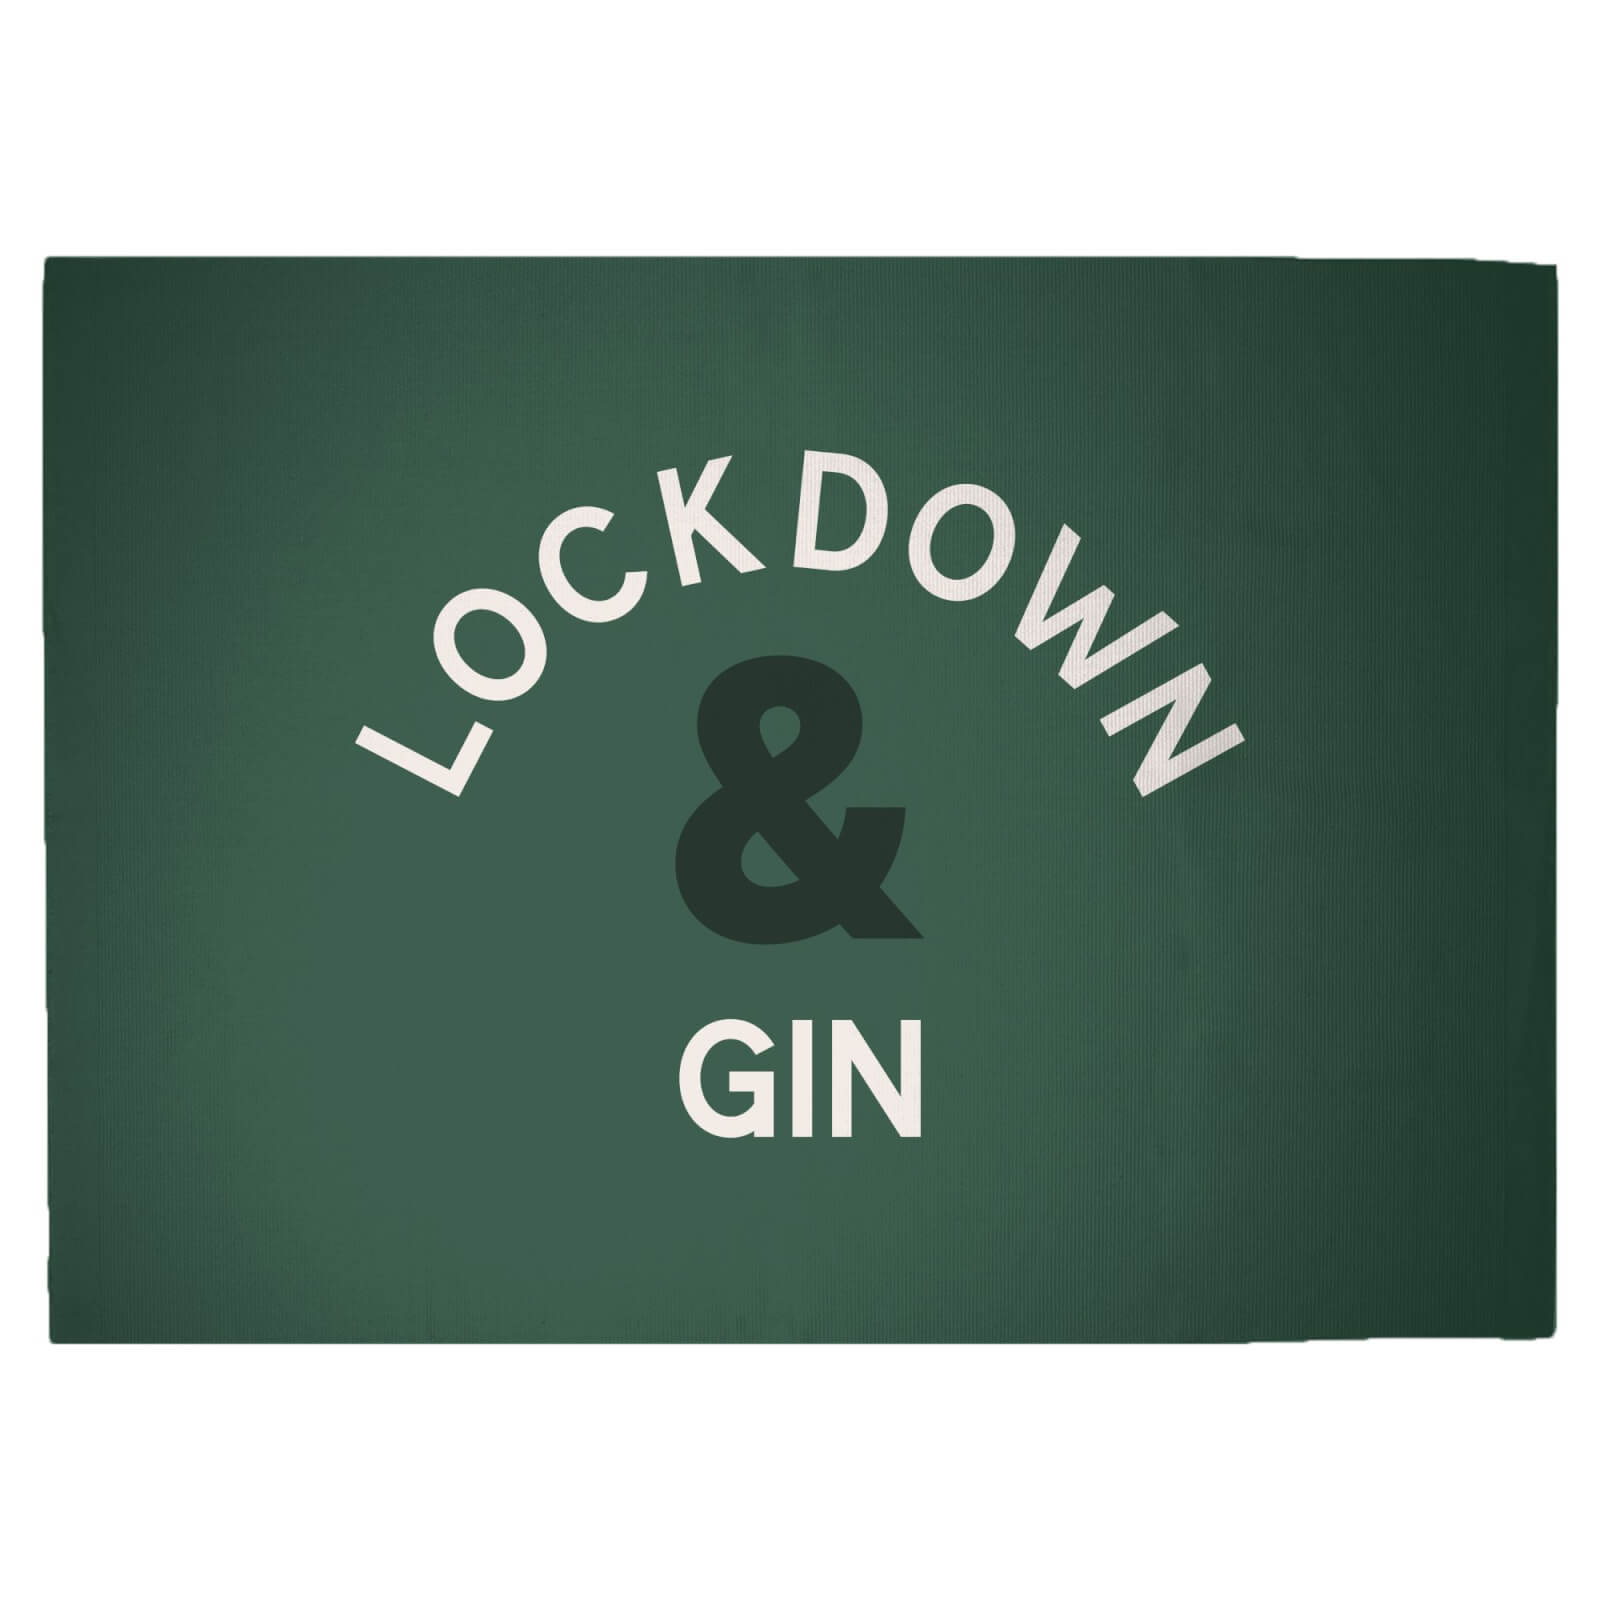 Lockdown & Gin Woven Rug - Large